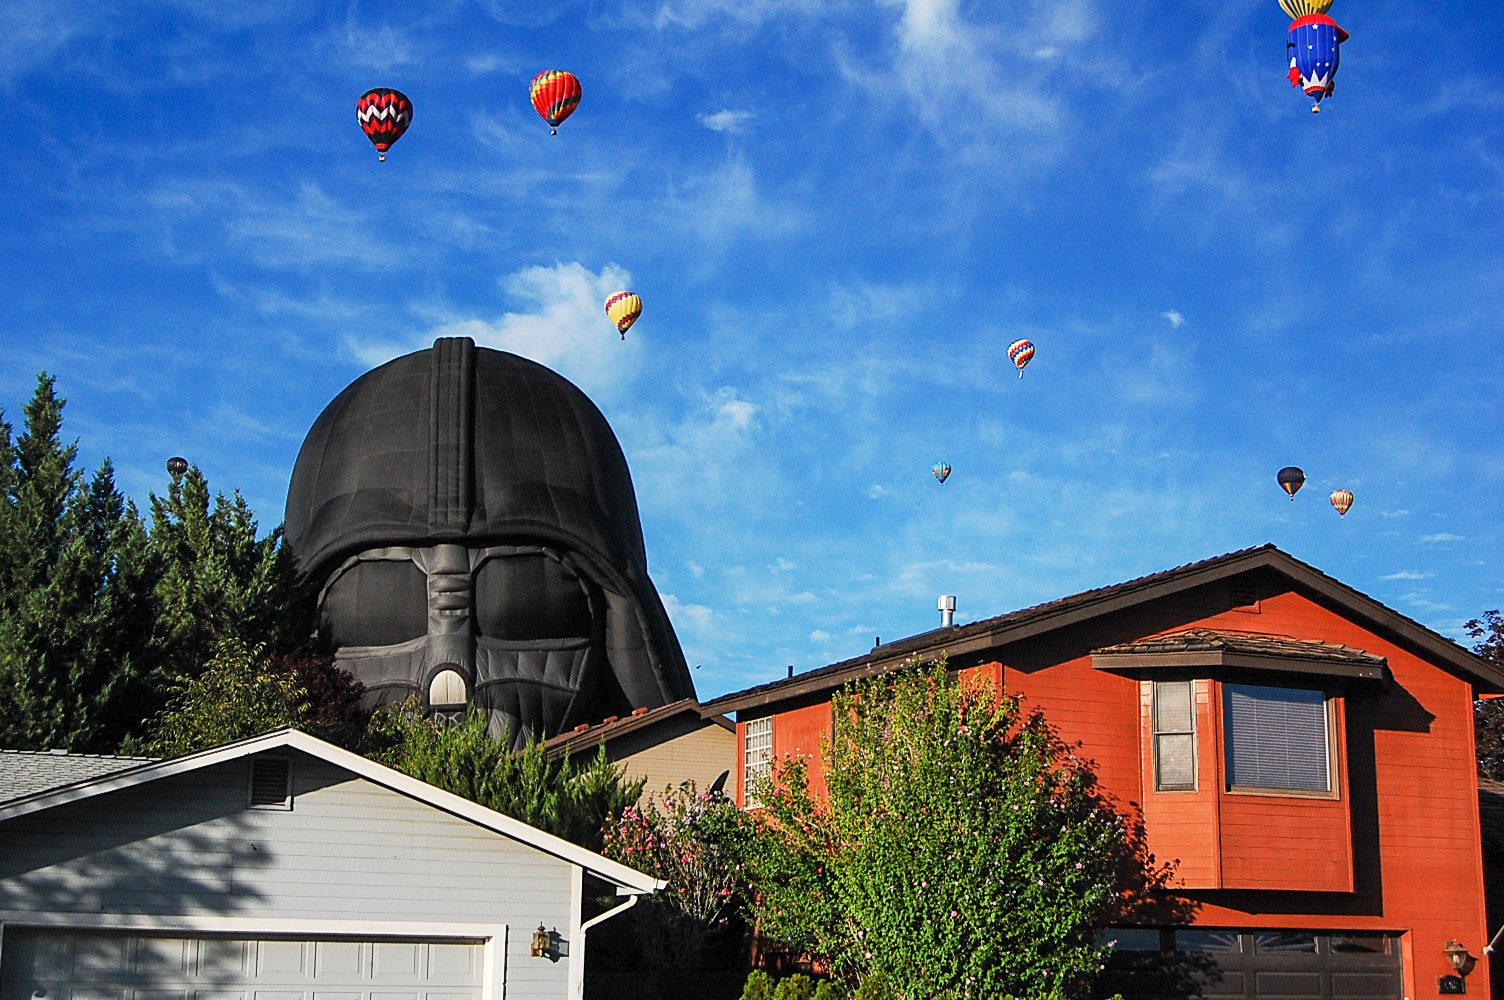 Balloons Over New Northwest Reno NV